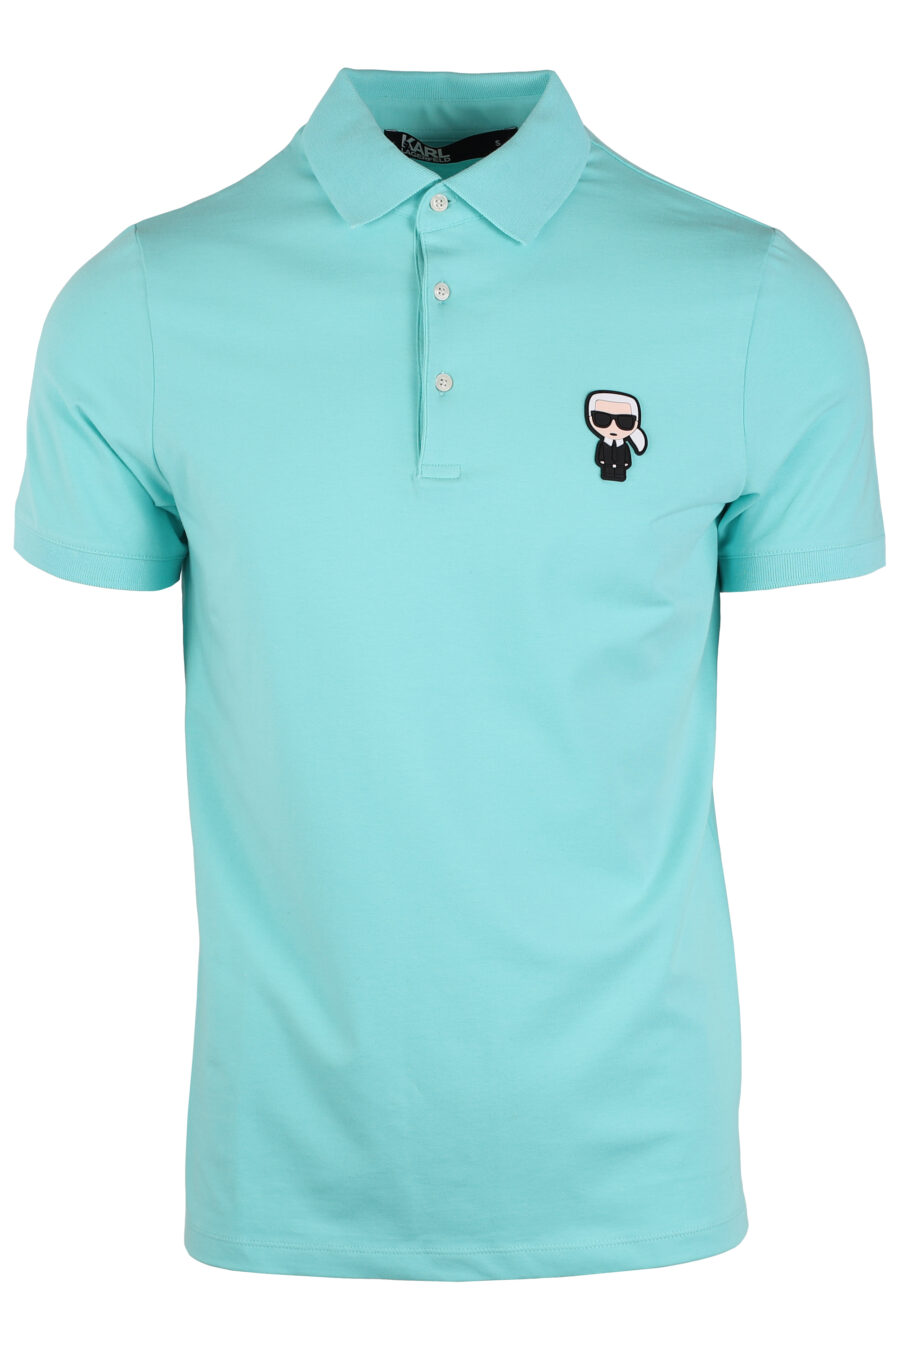 Mint blue polo shirt with "ikonik" logo - IMG 4044